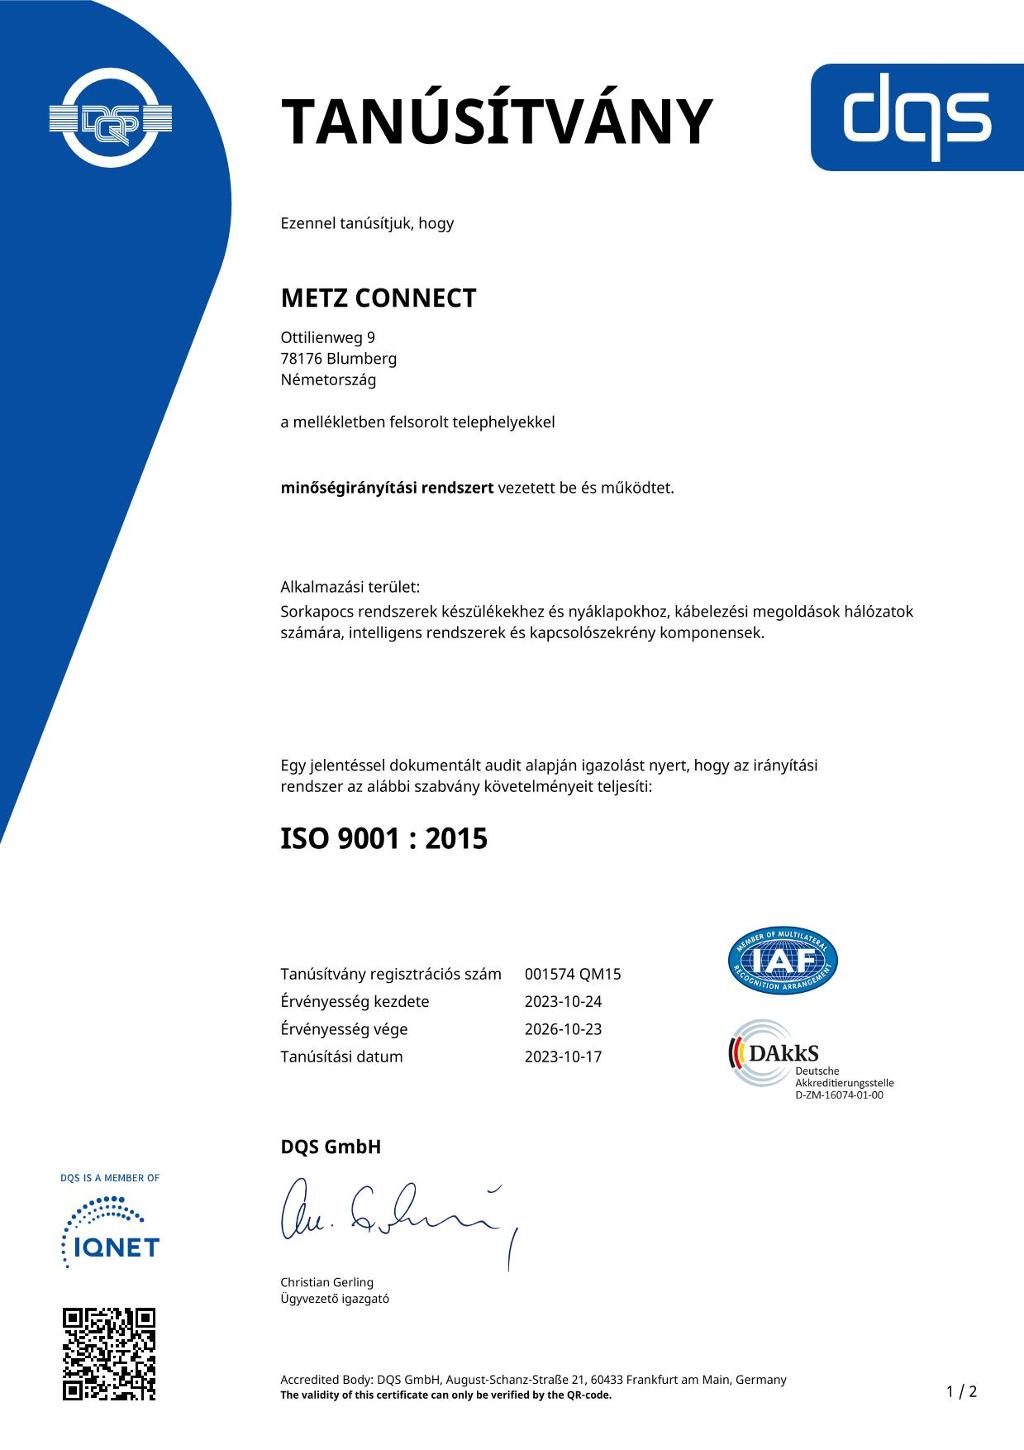 Tanúsítvány ISO 9001 : 2015